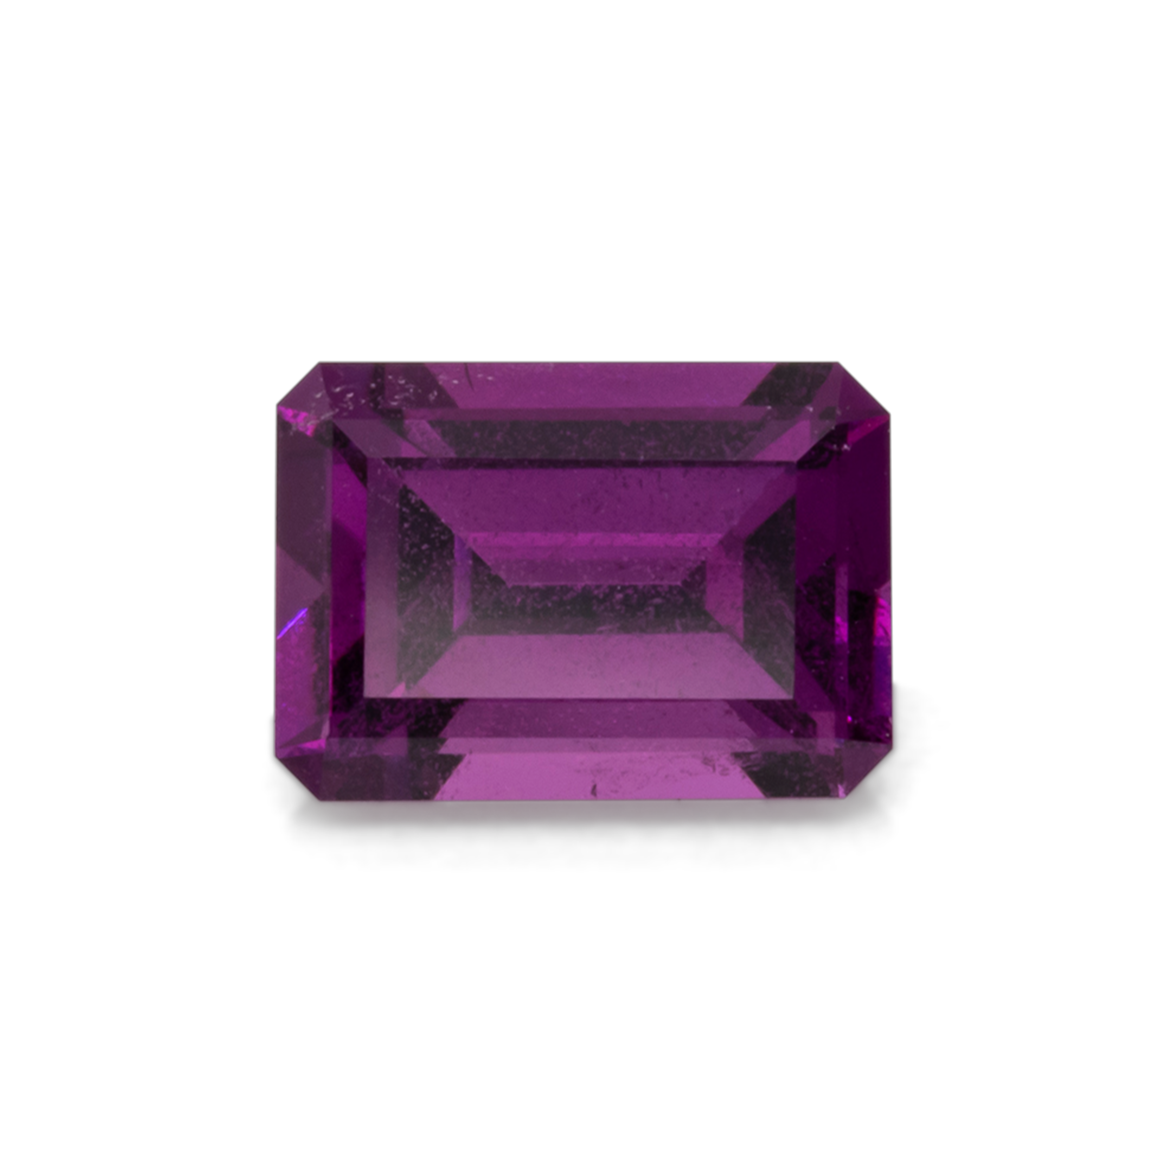 Royal Purple Garnet - purple, octagon, 7.1x5 mm, 1.31 cts, No. RP93007